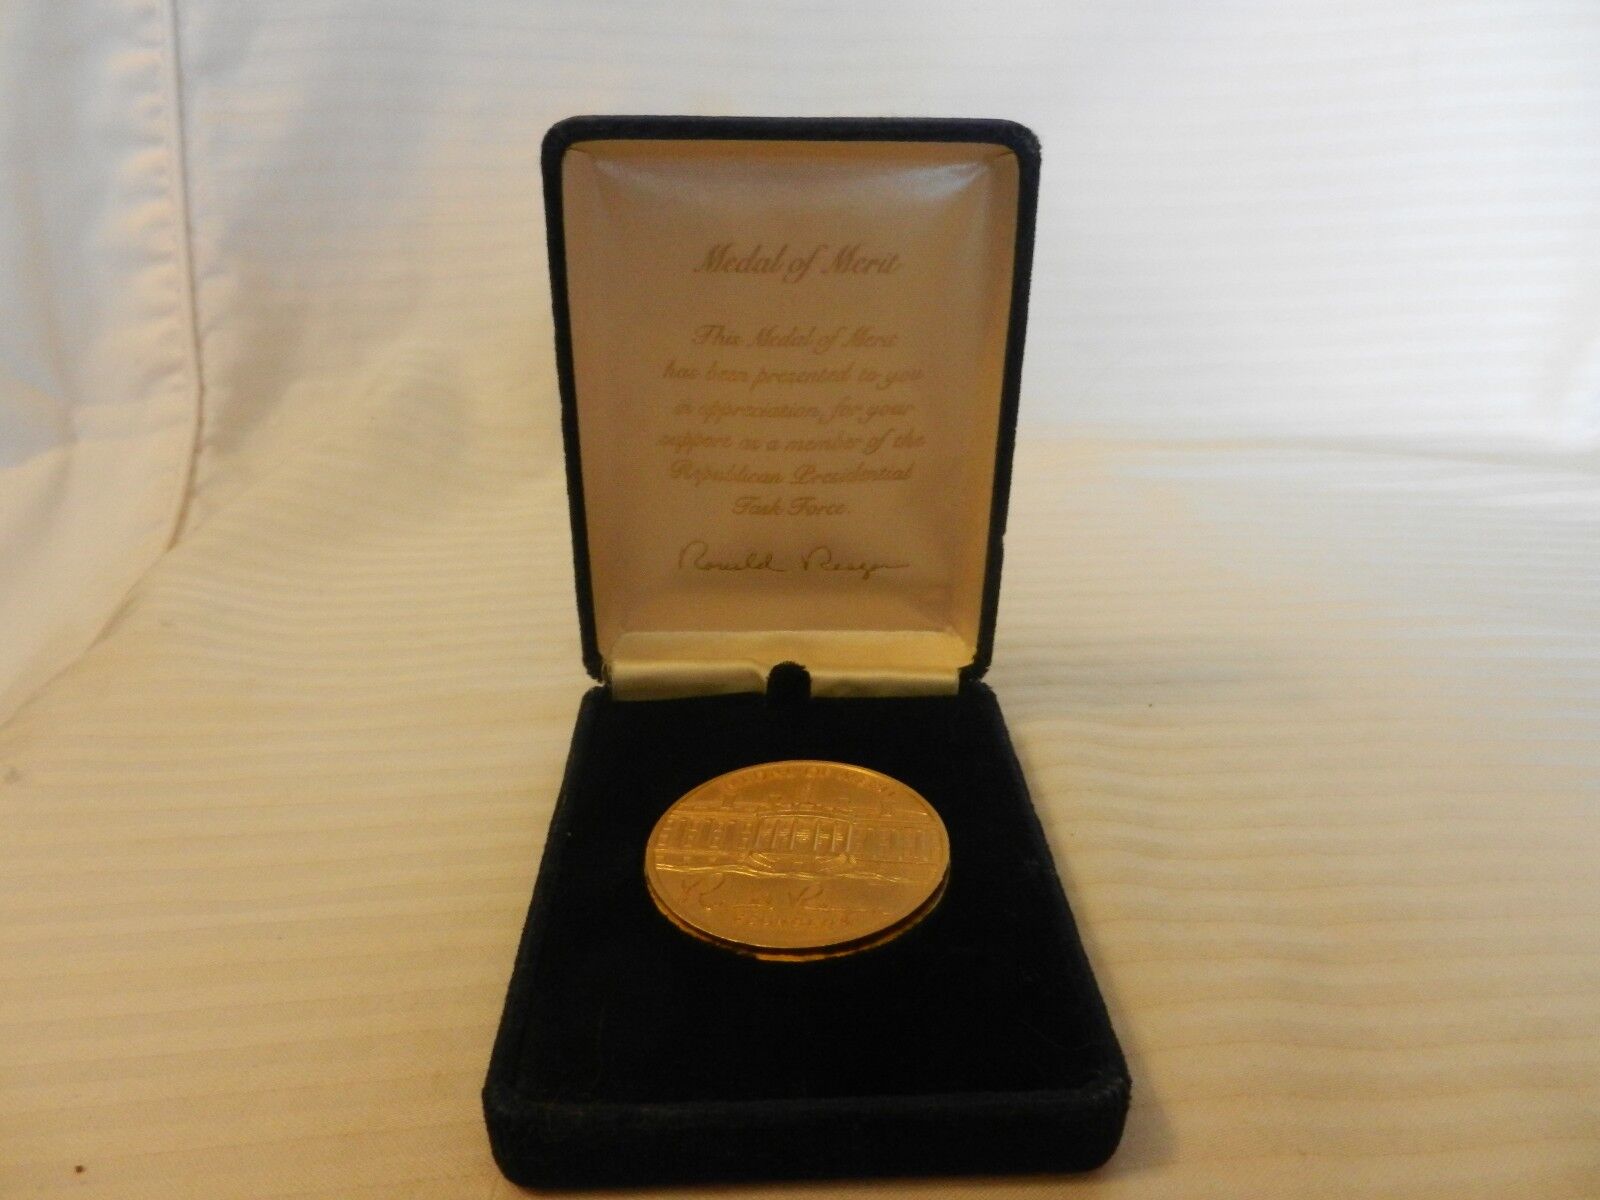 Vintage 1980s Ronald Reagan Medal of Merit Presidential Task Force Medallion in 